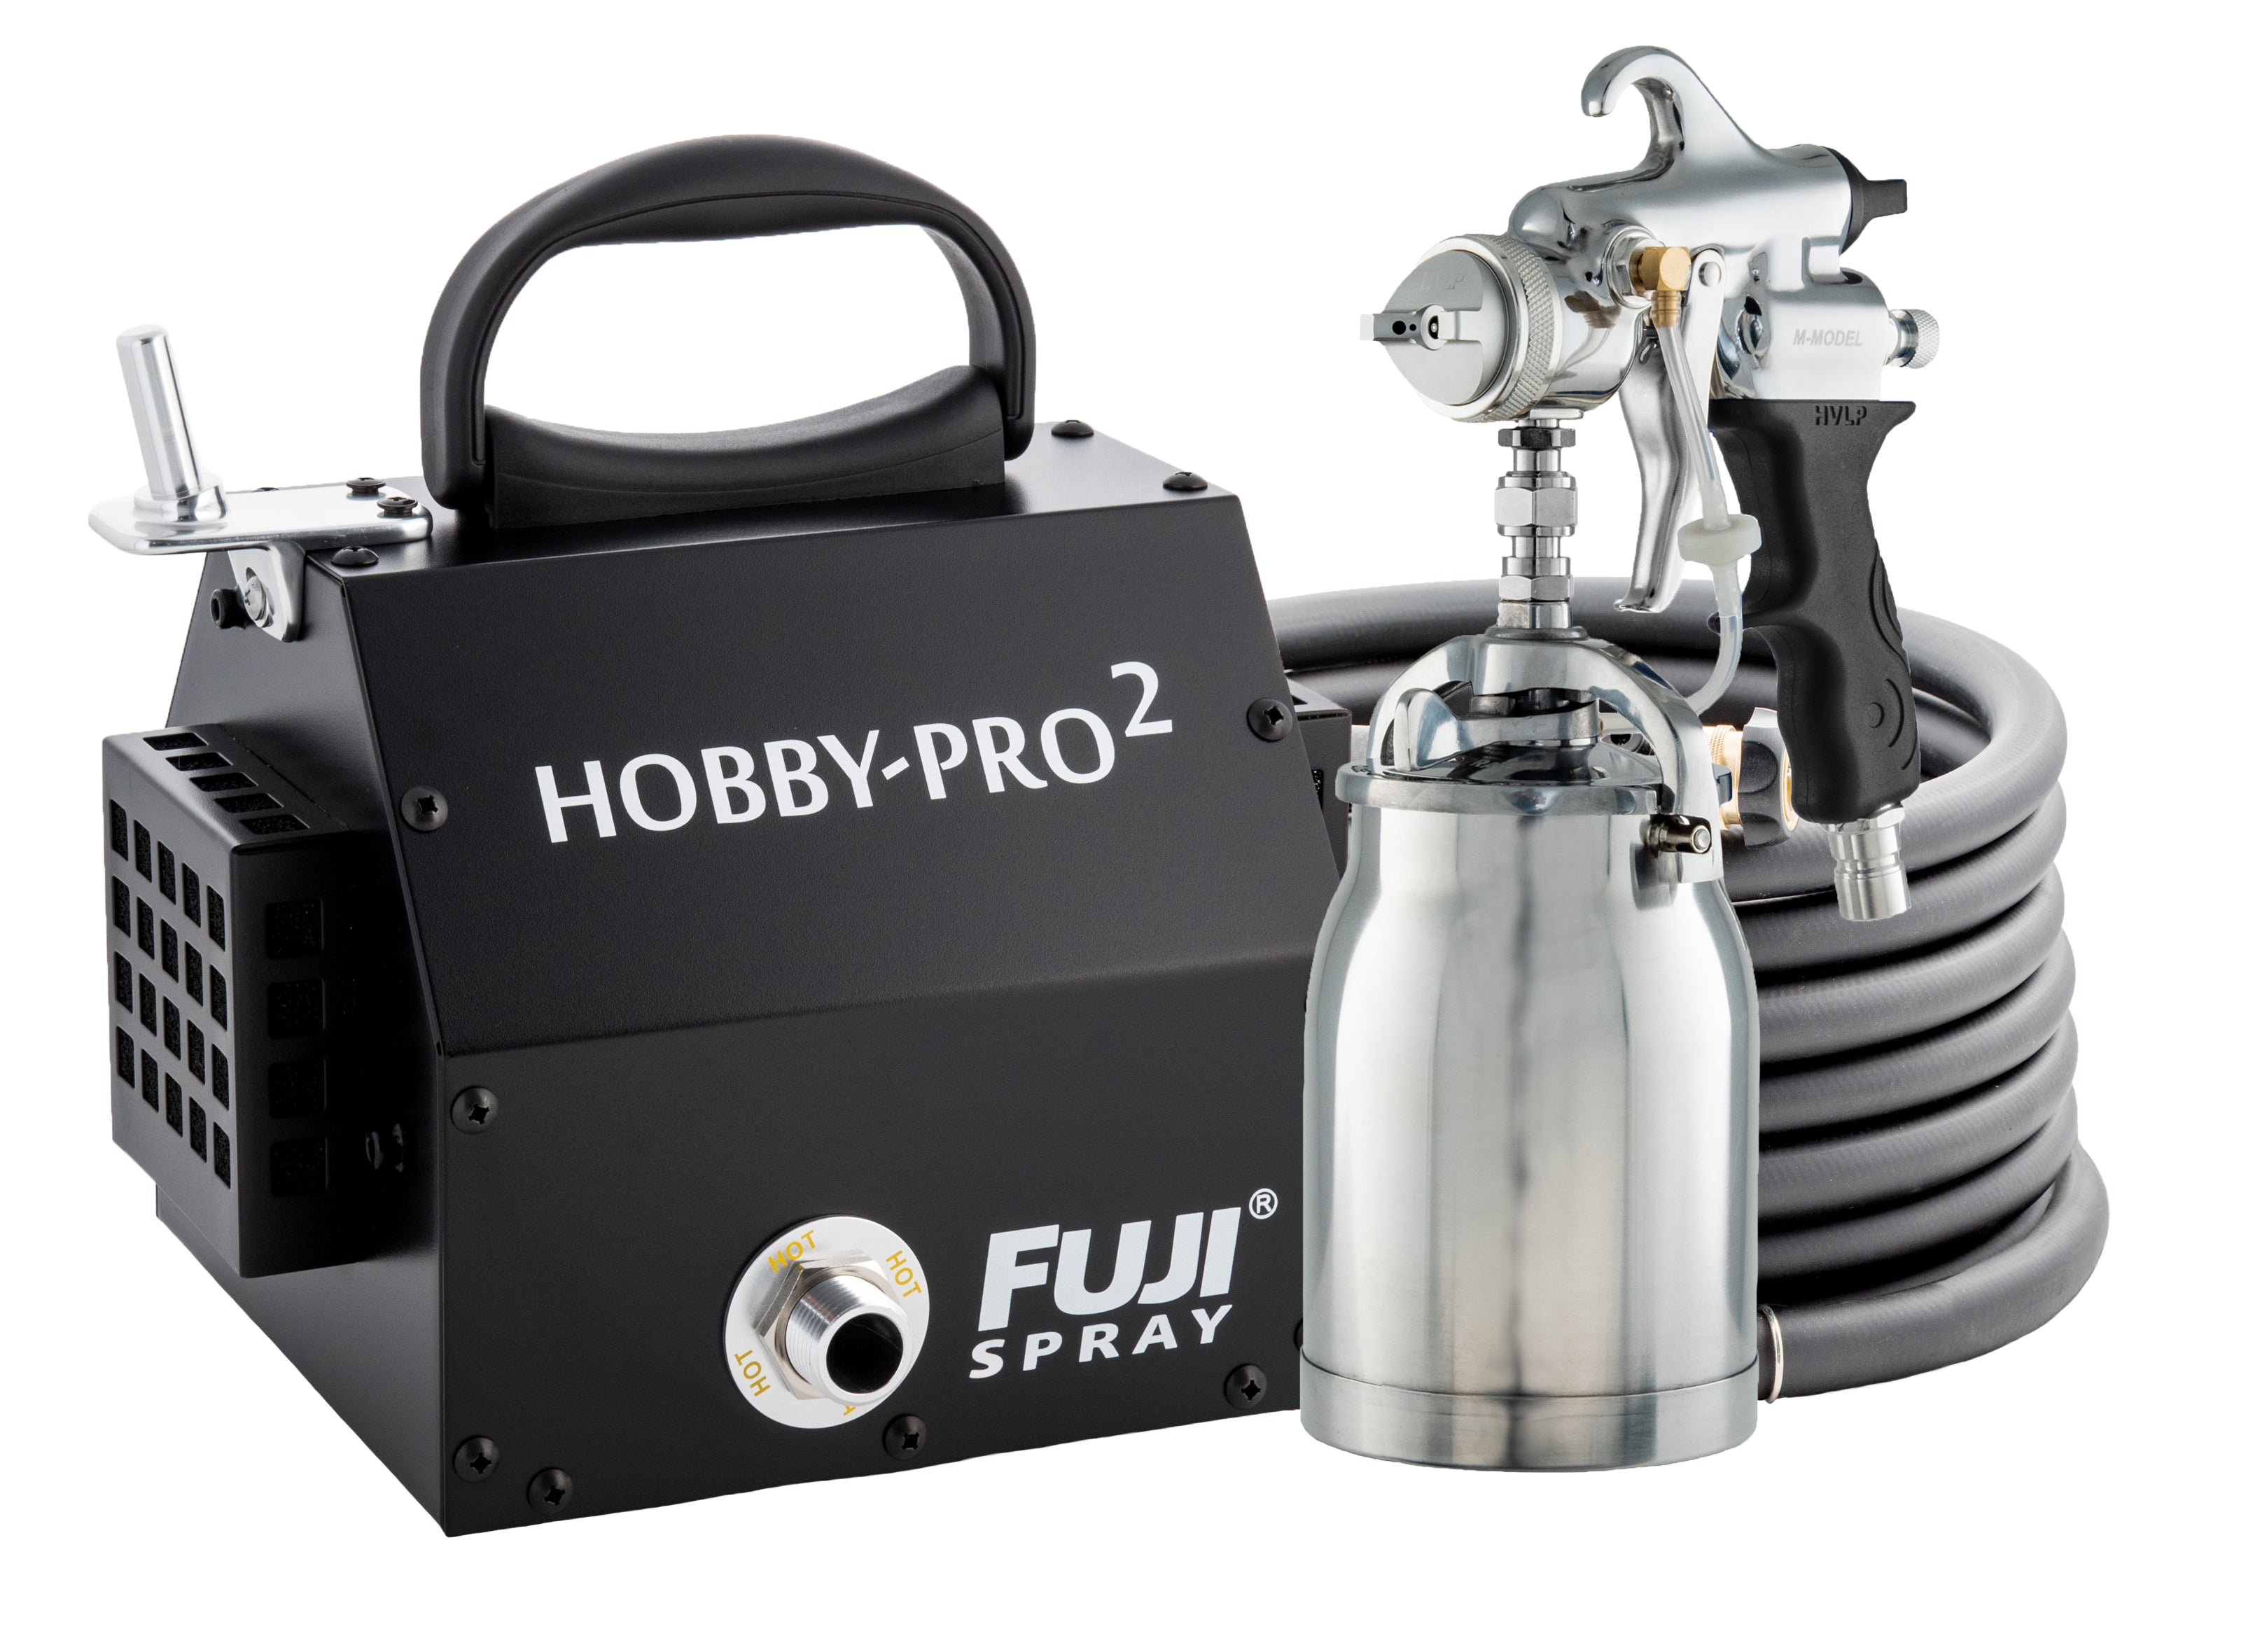 Fuji Spray Hobby-Pro 2™ Turbine System with Spray Gun, Hose, and Turbine